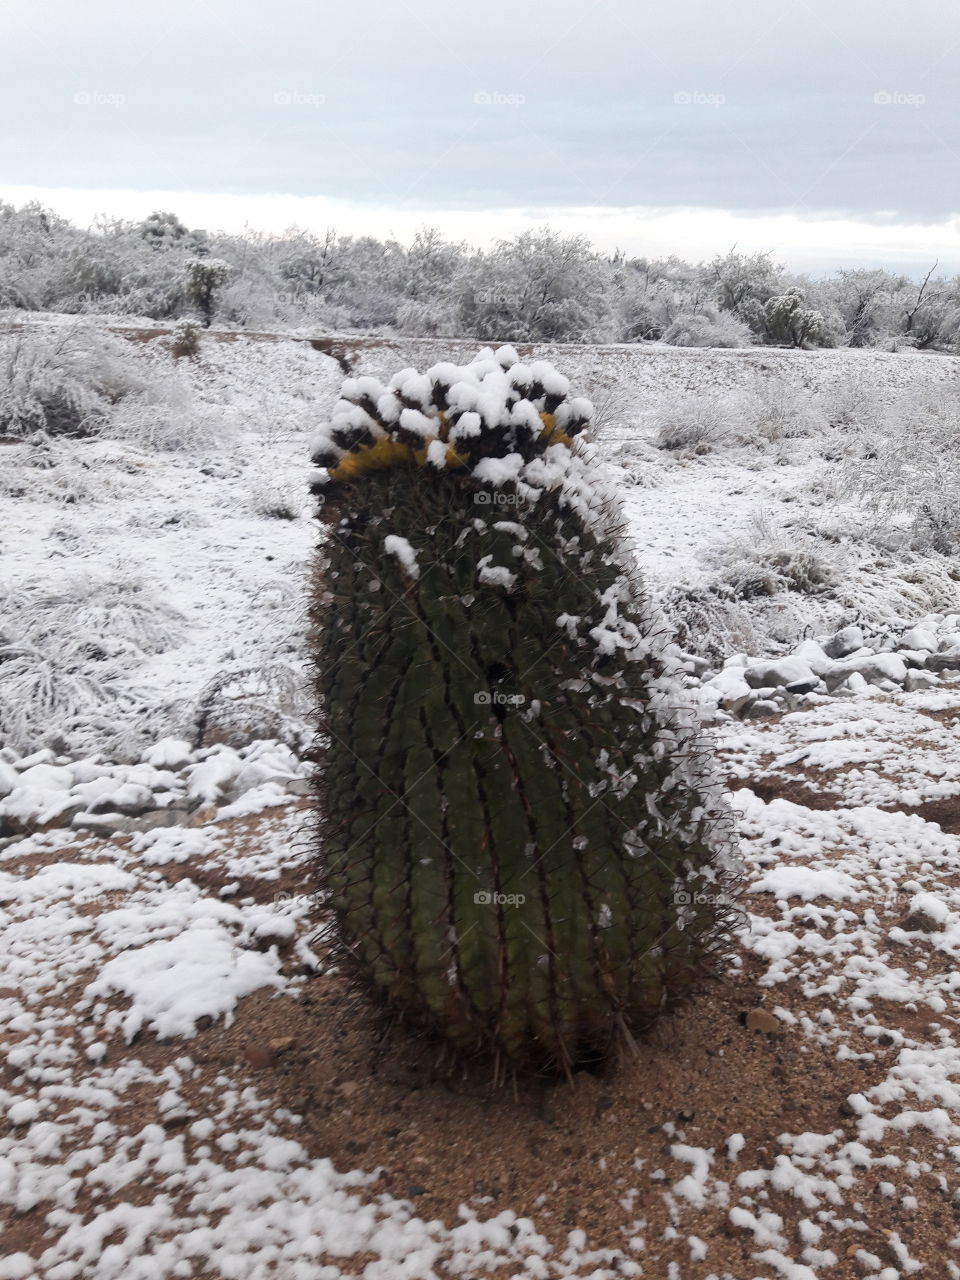 Snow covered cactus